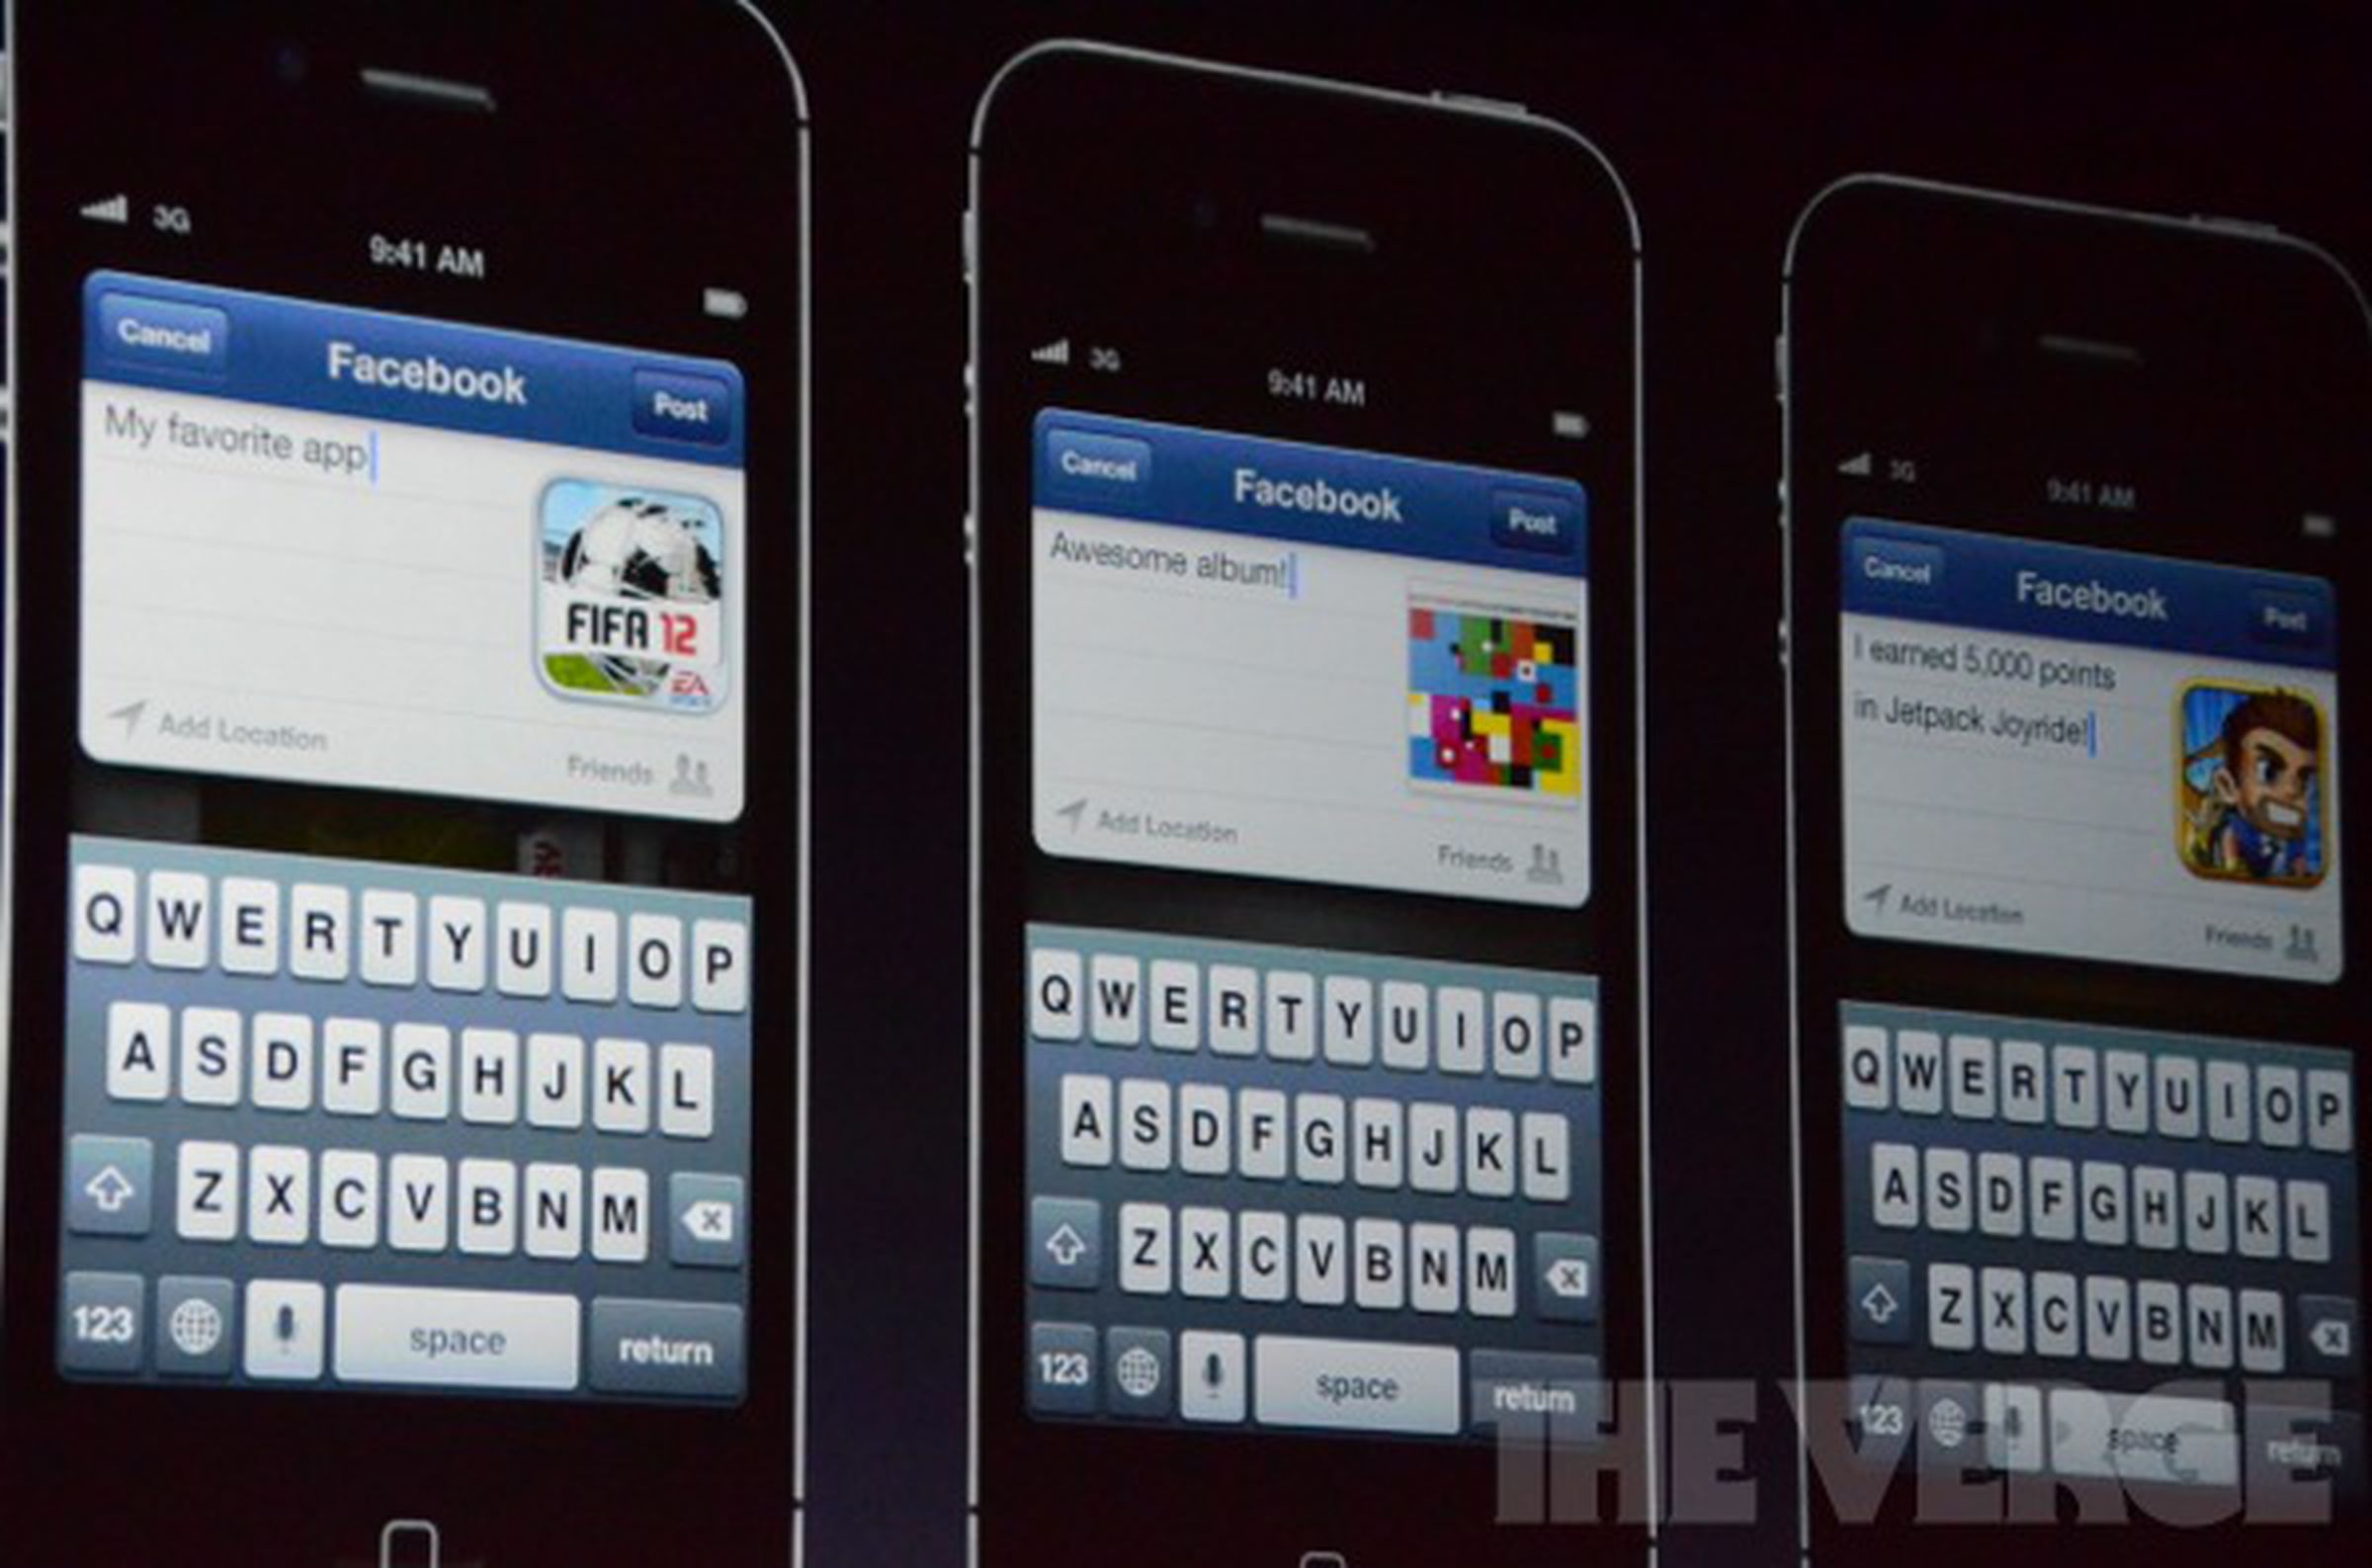 Facebook iOS 6 integration screenshots